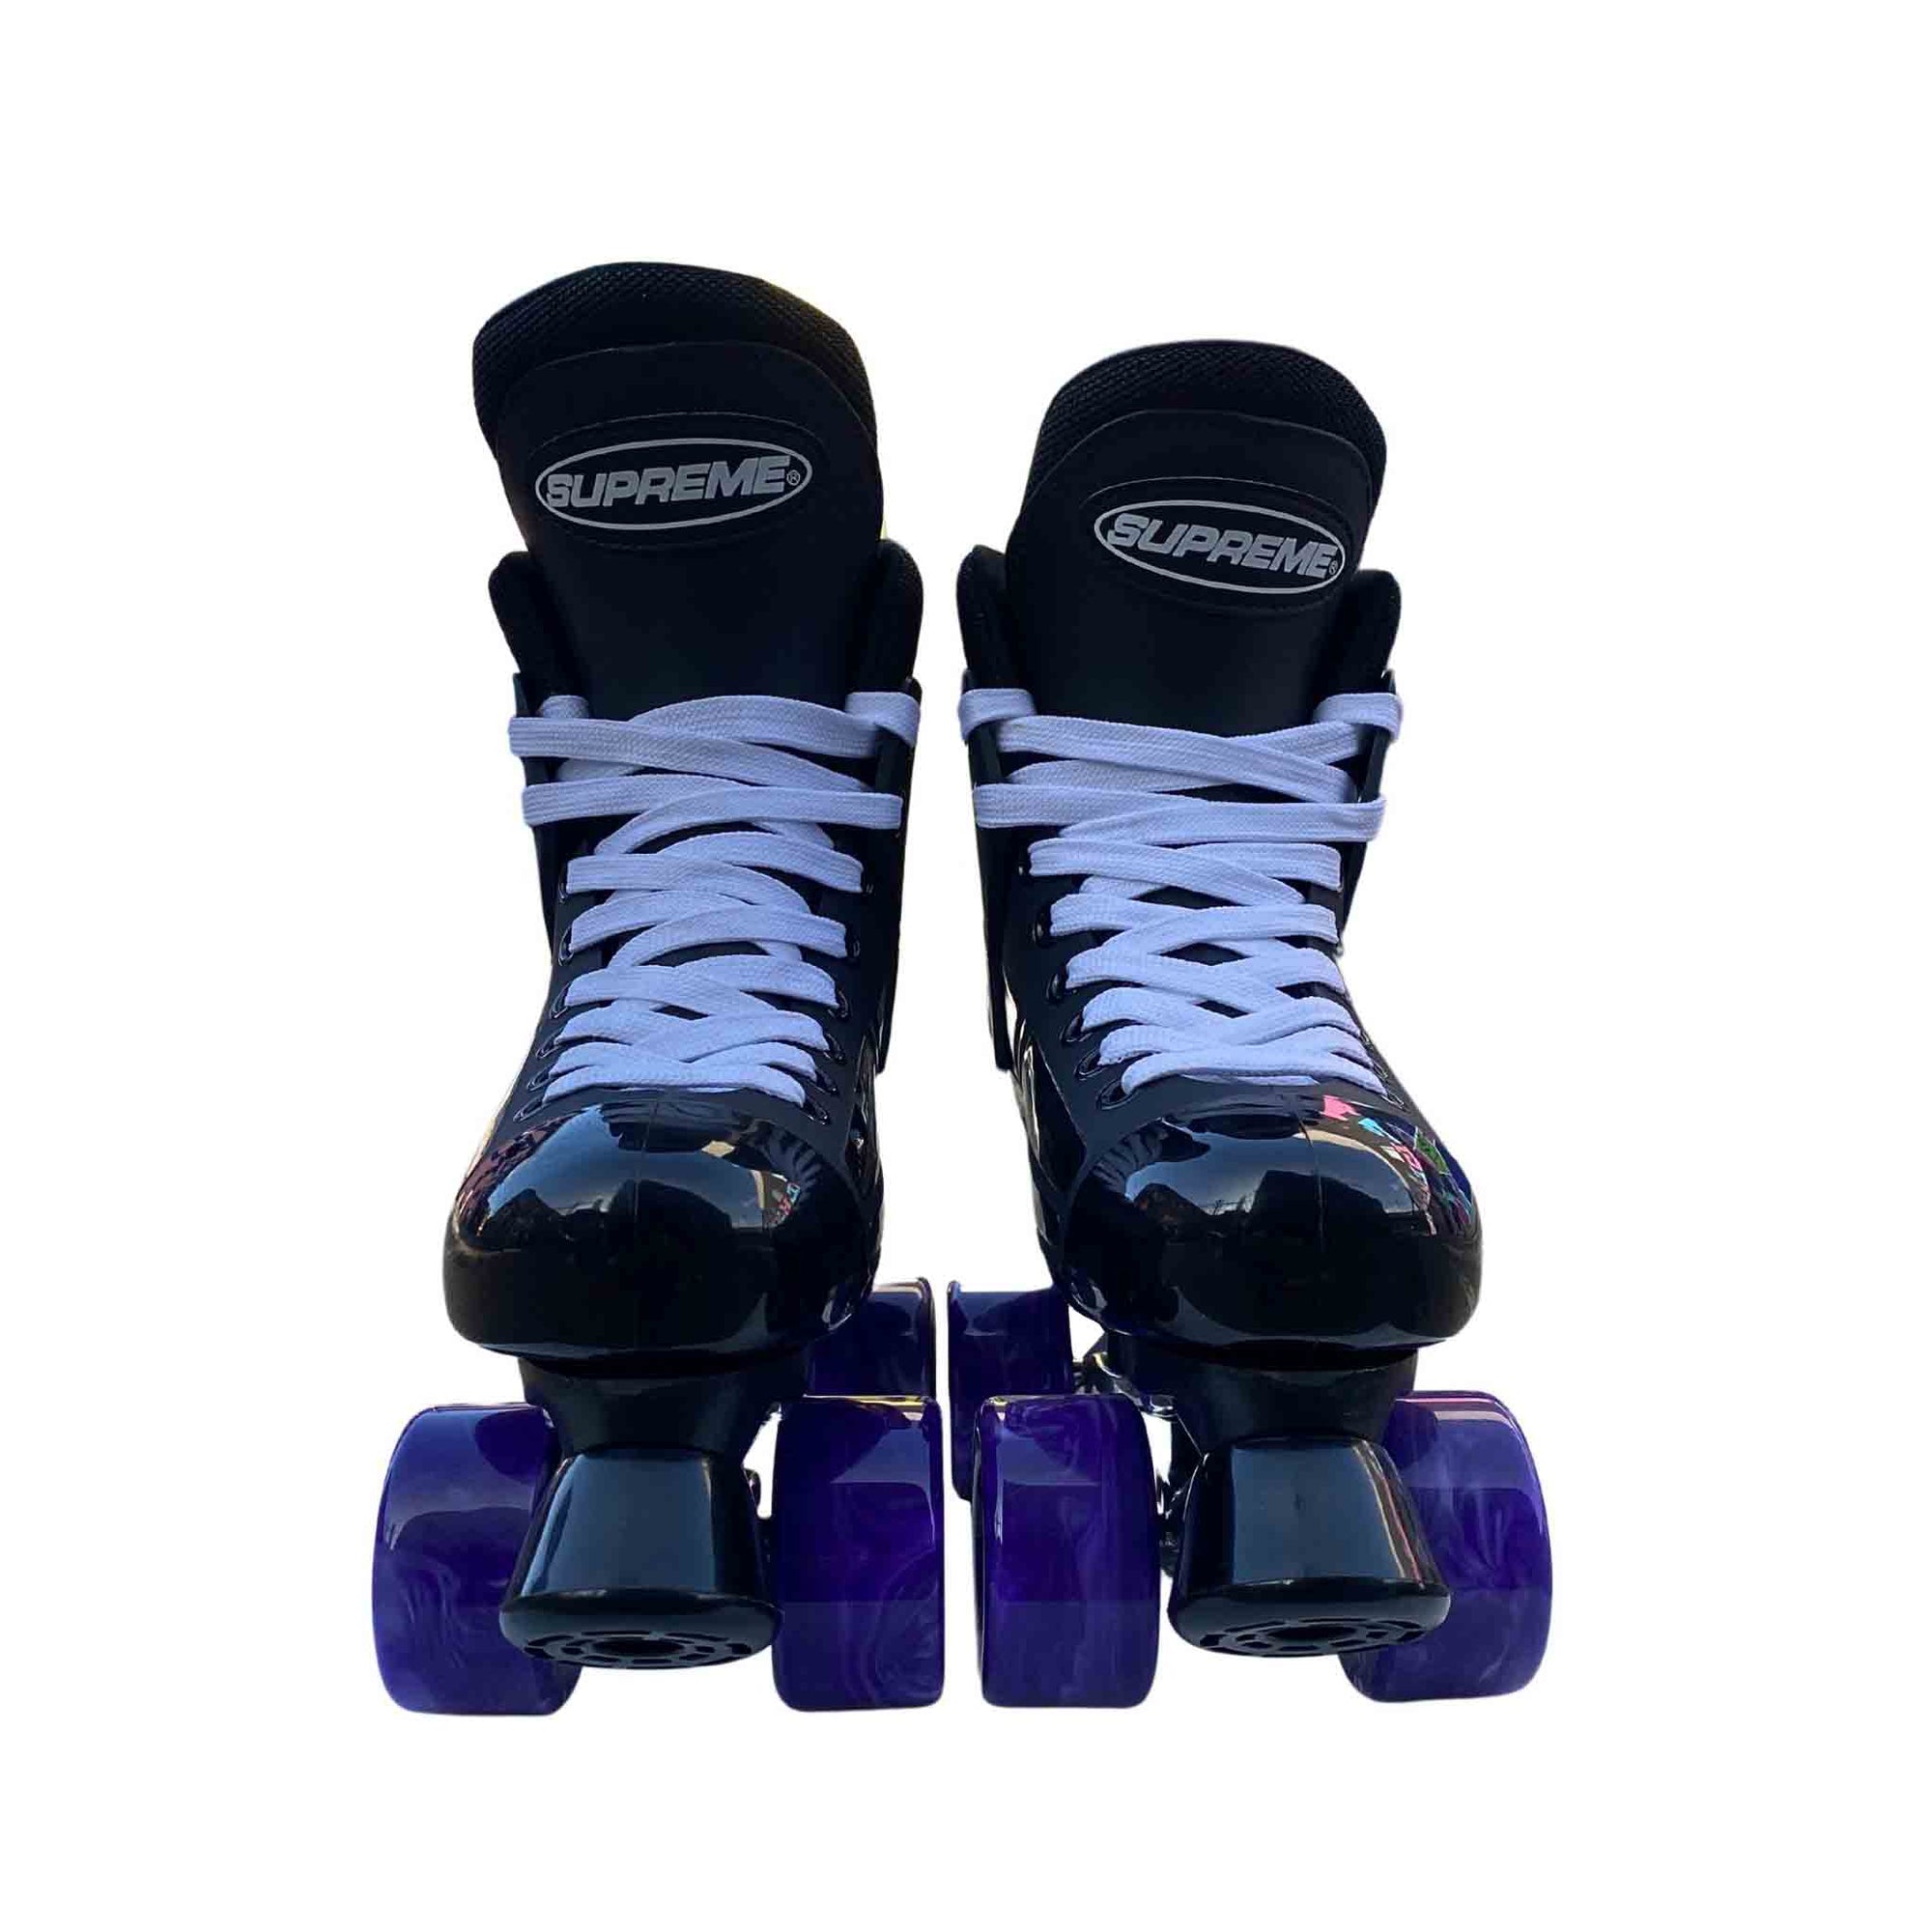 Supreme Turbo 33 Roller Skates with Airwaves Wheels - JT Skate